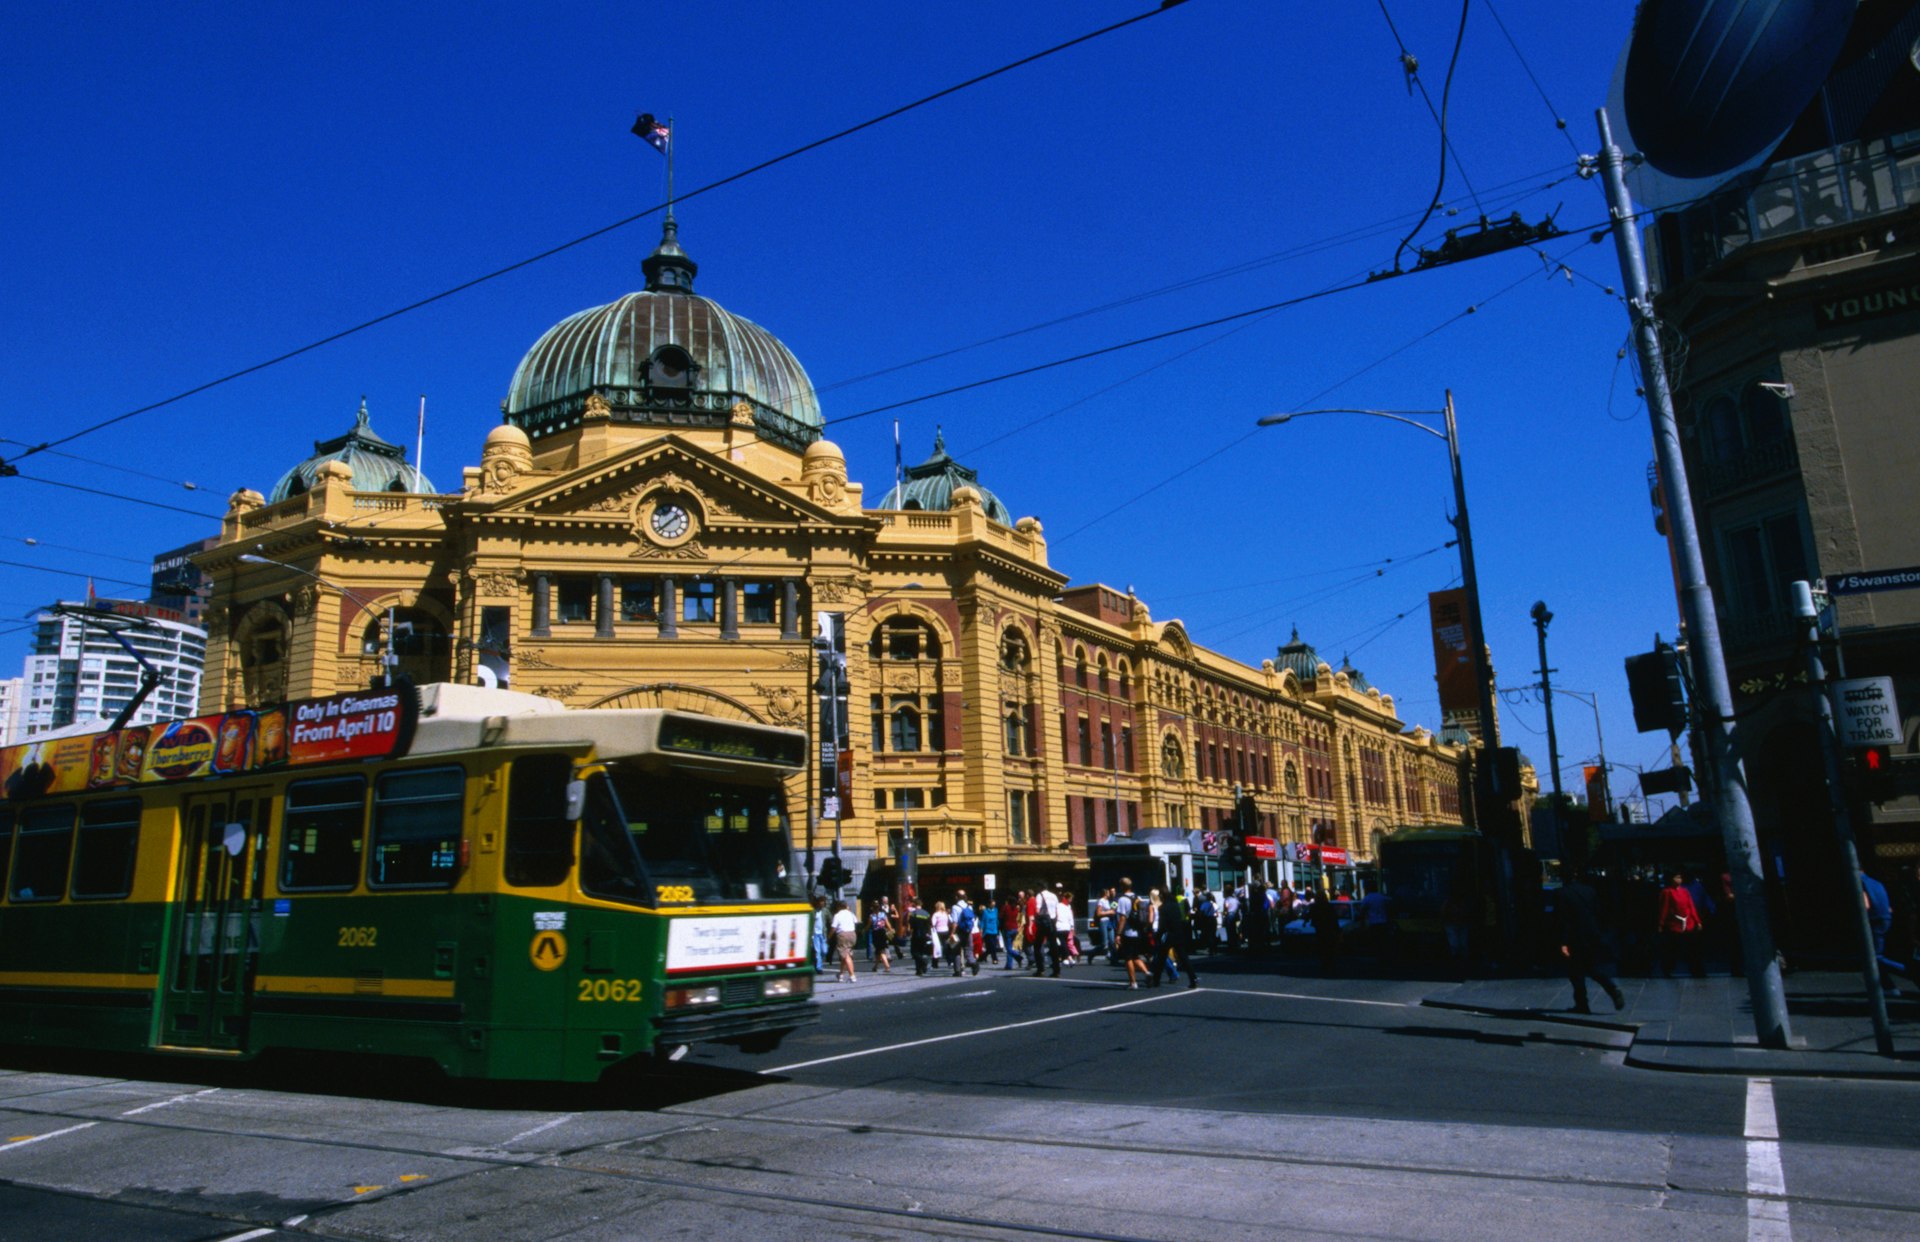 A tram passing Flinders Street Station in Melbourne